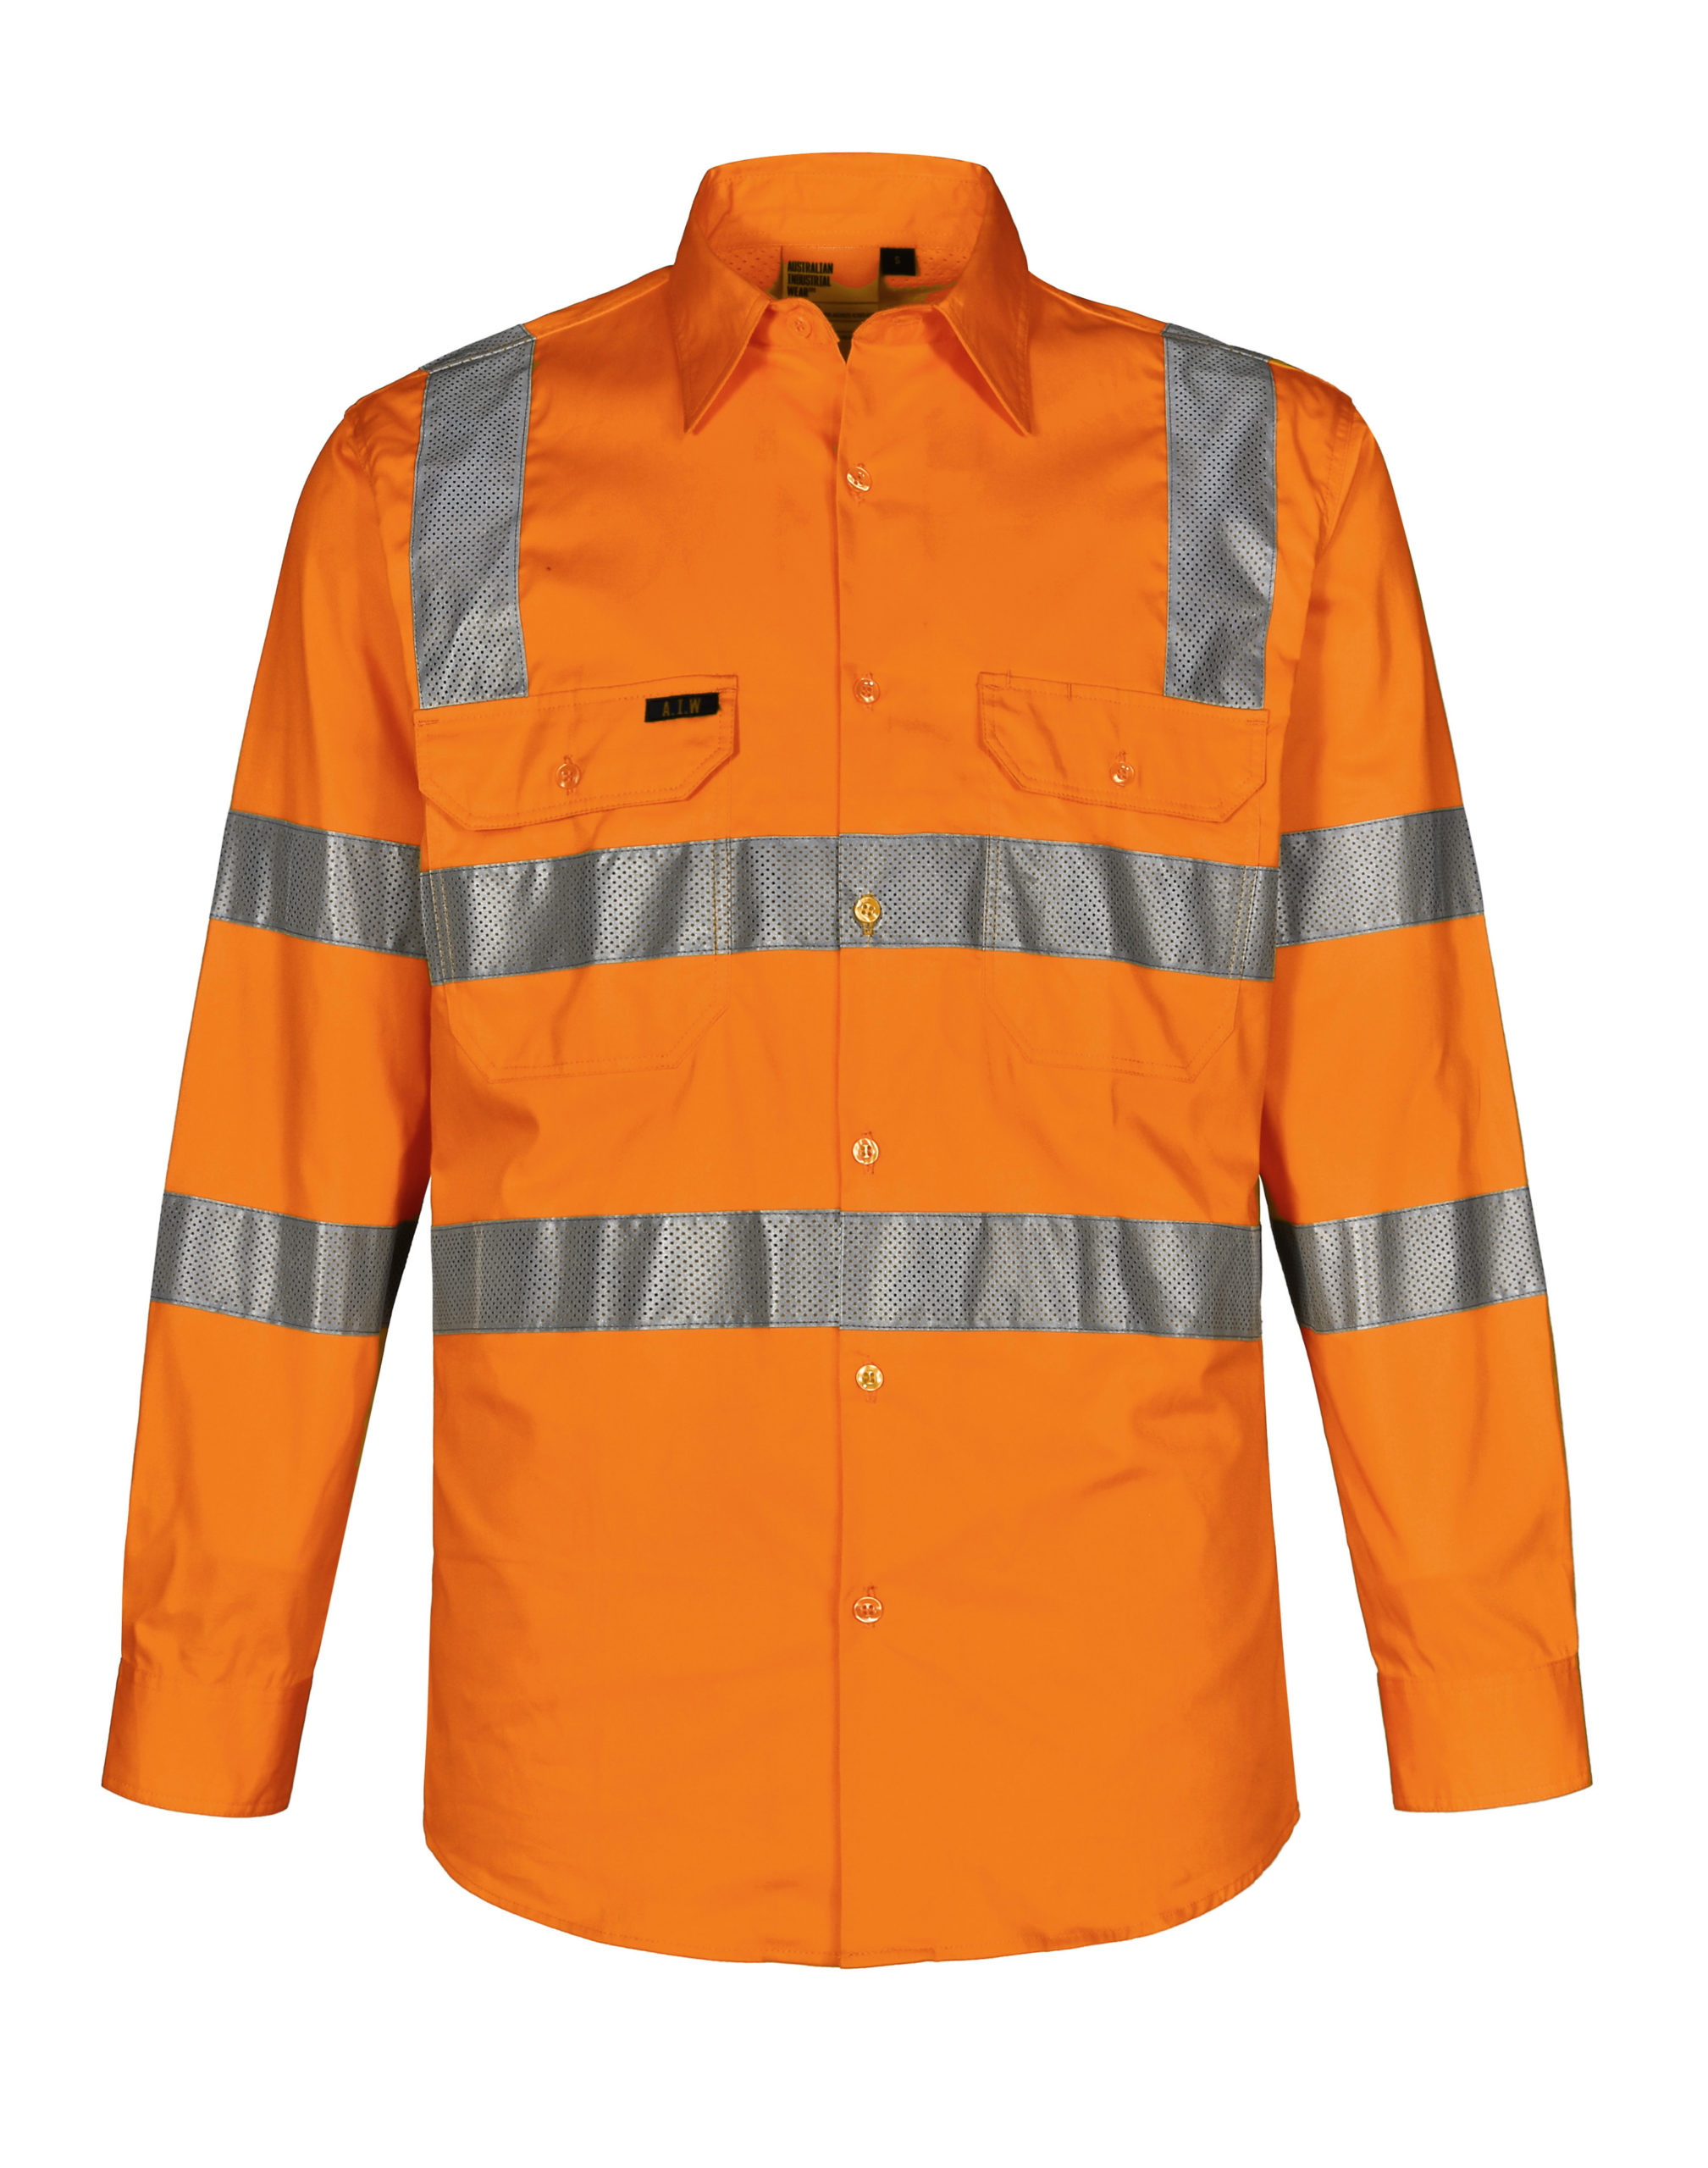 SW55 VIC Rail Lightweight Safety Shirt- Unisex